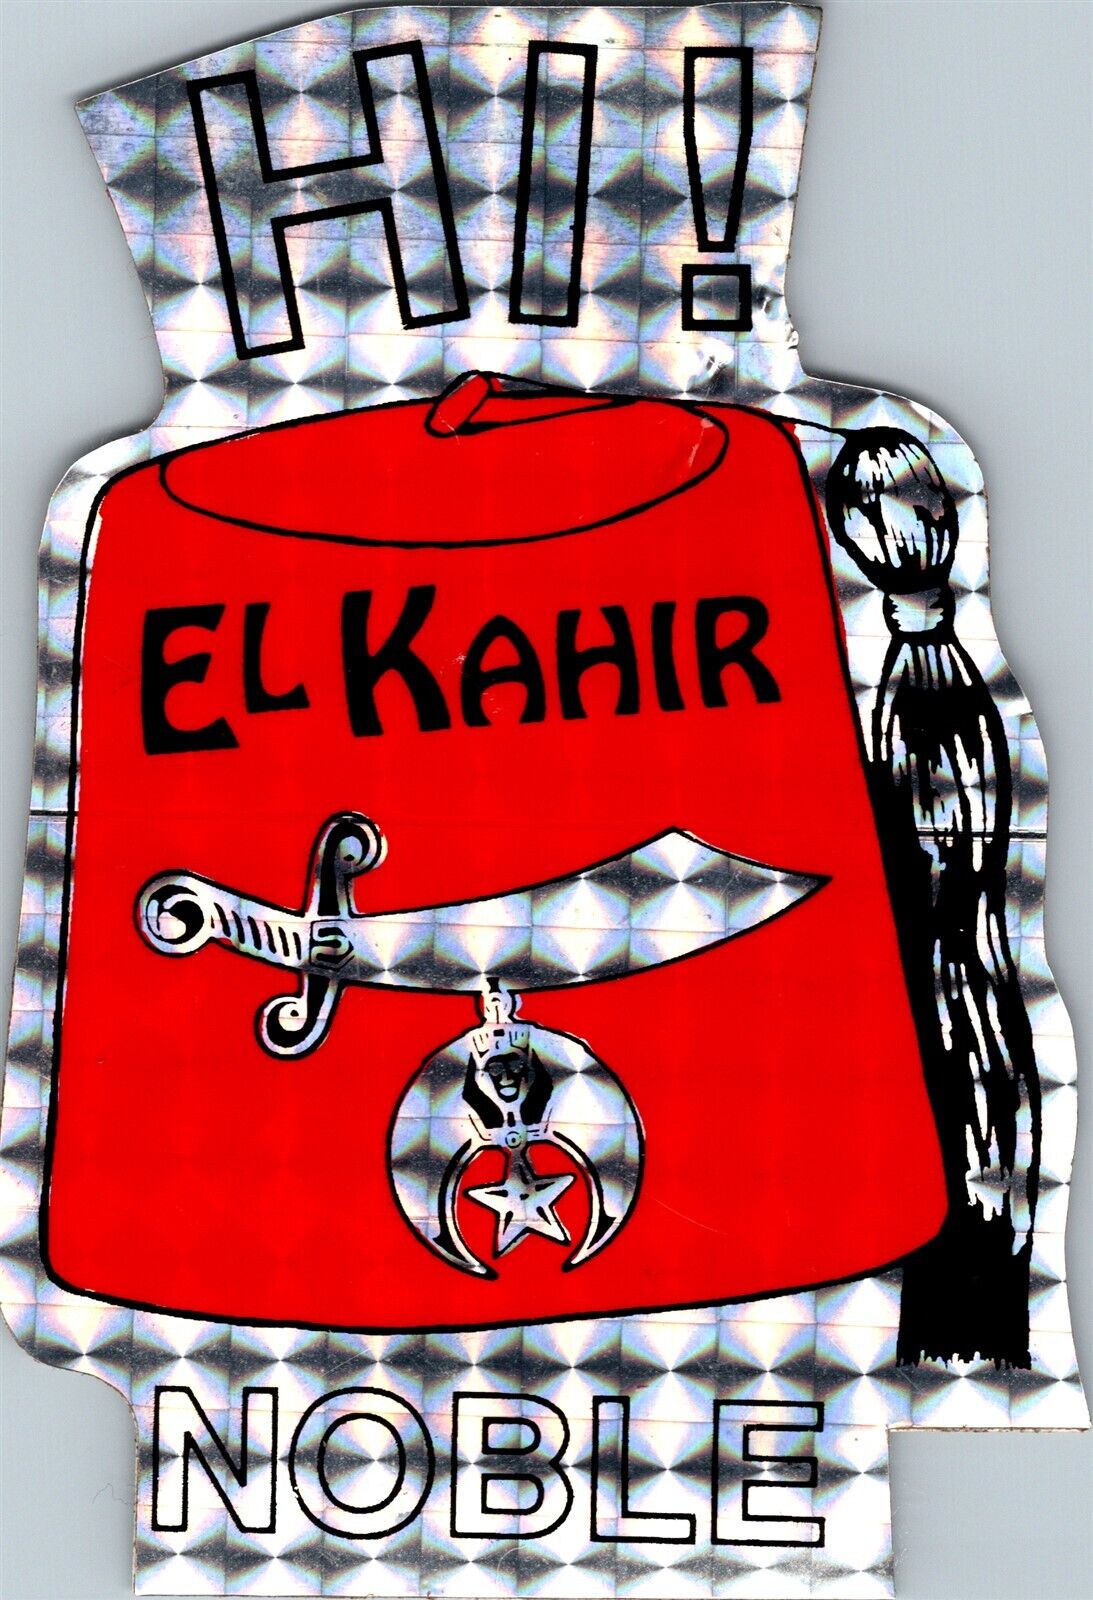 Holographic Decal Nobles of El Kahir Shrine Hiawatha Iowa Mason